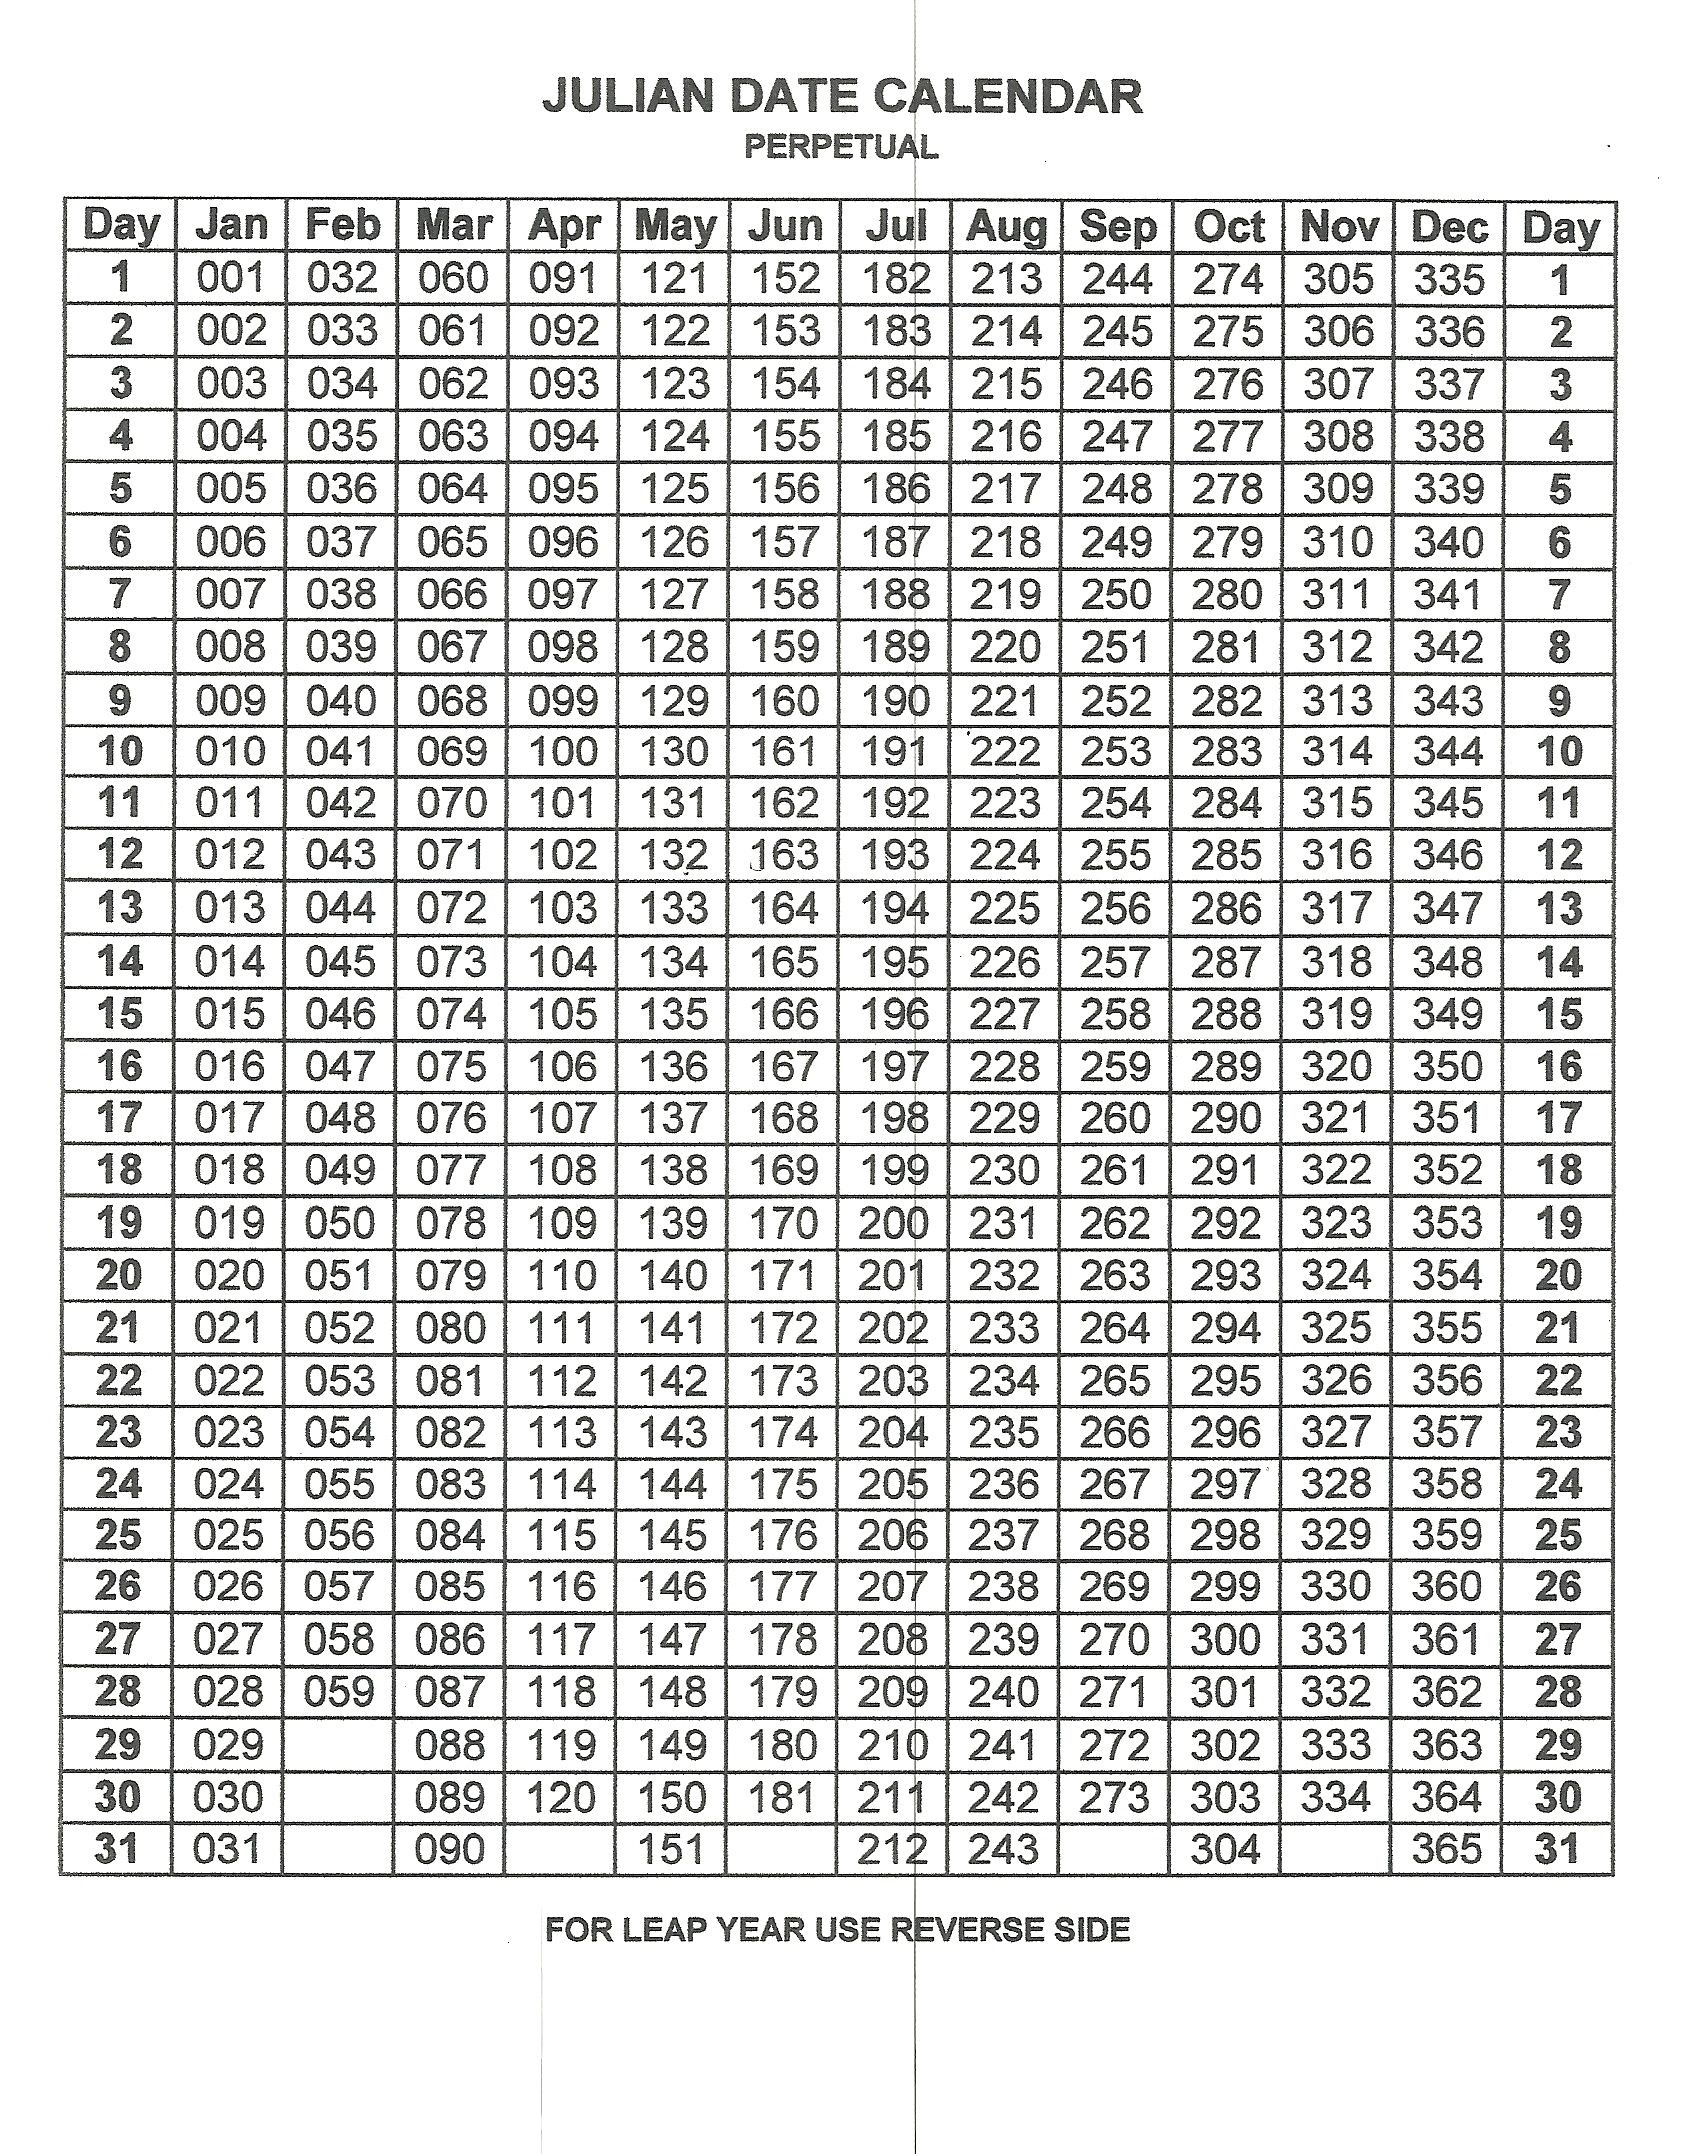 Julian Date Calendar 2020 2020 | Example Calendar Printable with Julian Date Calendar For Year 2020